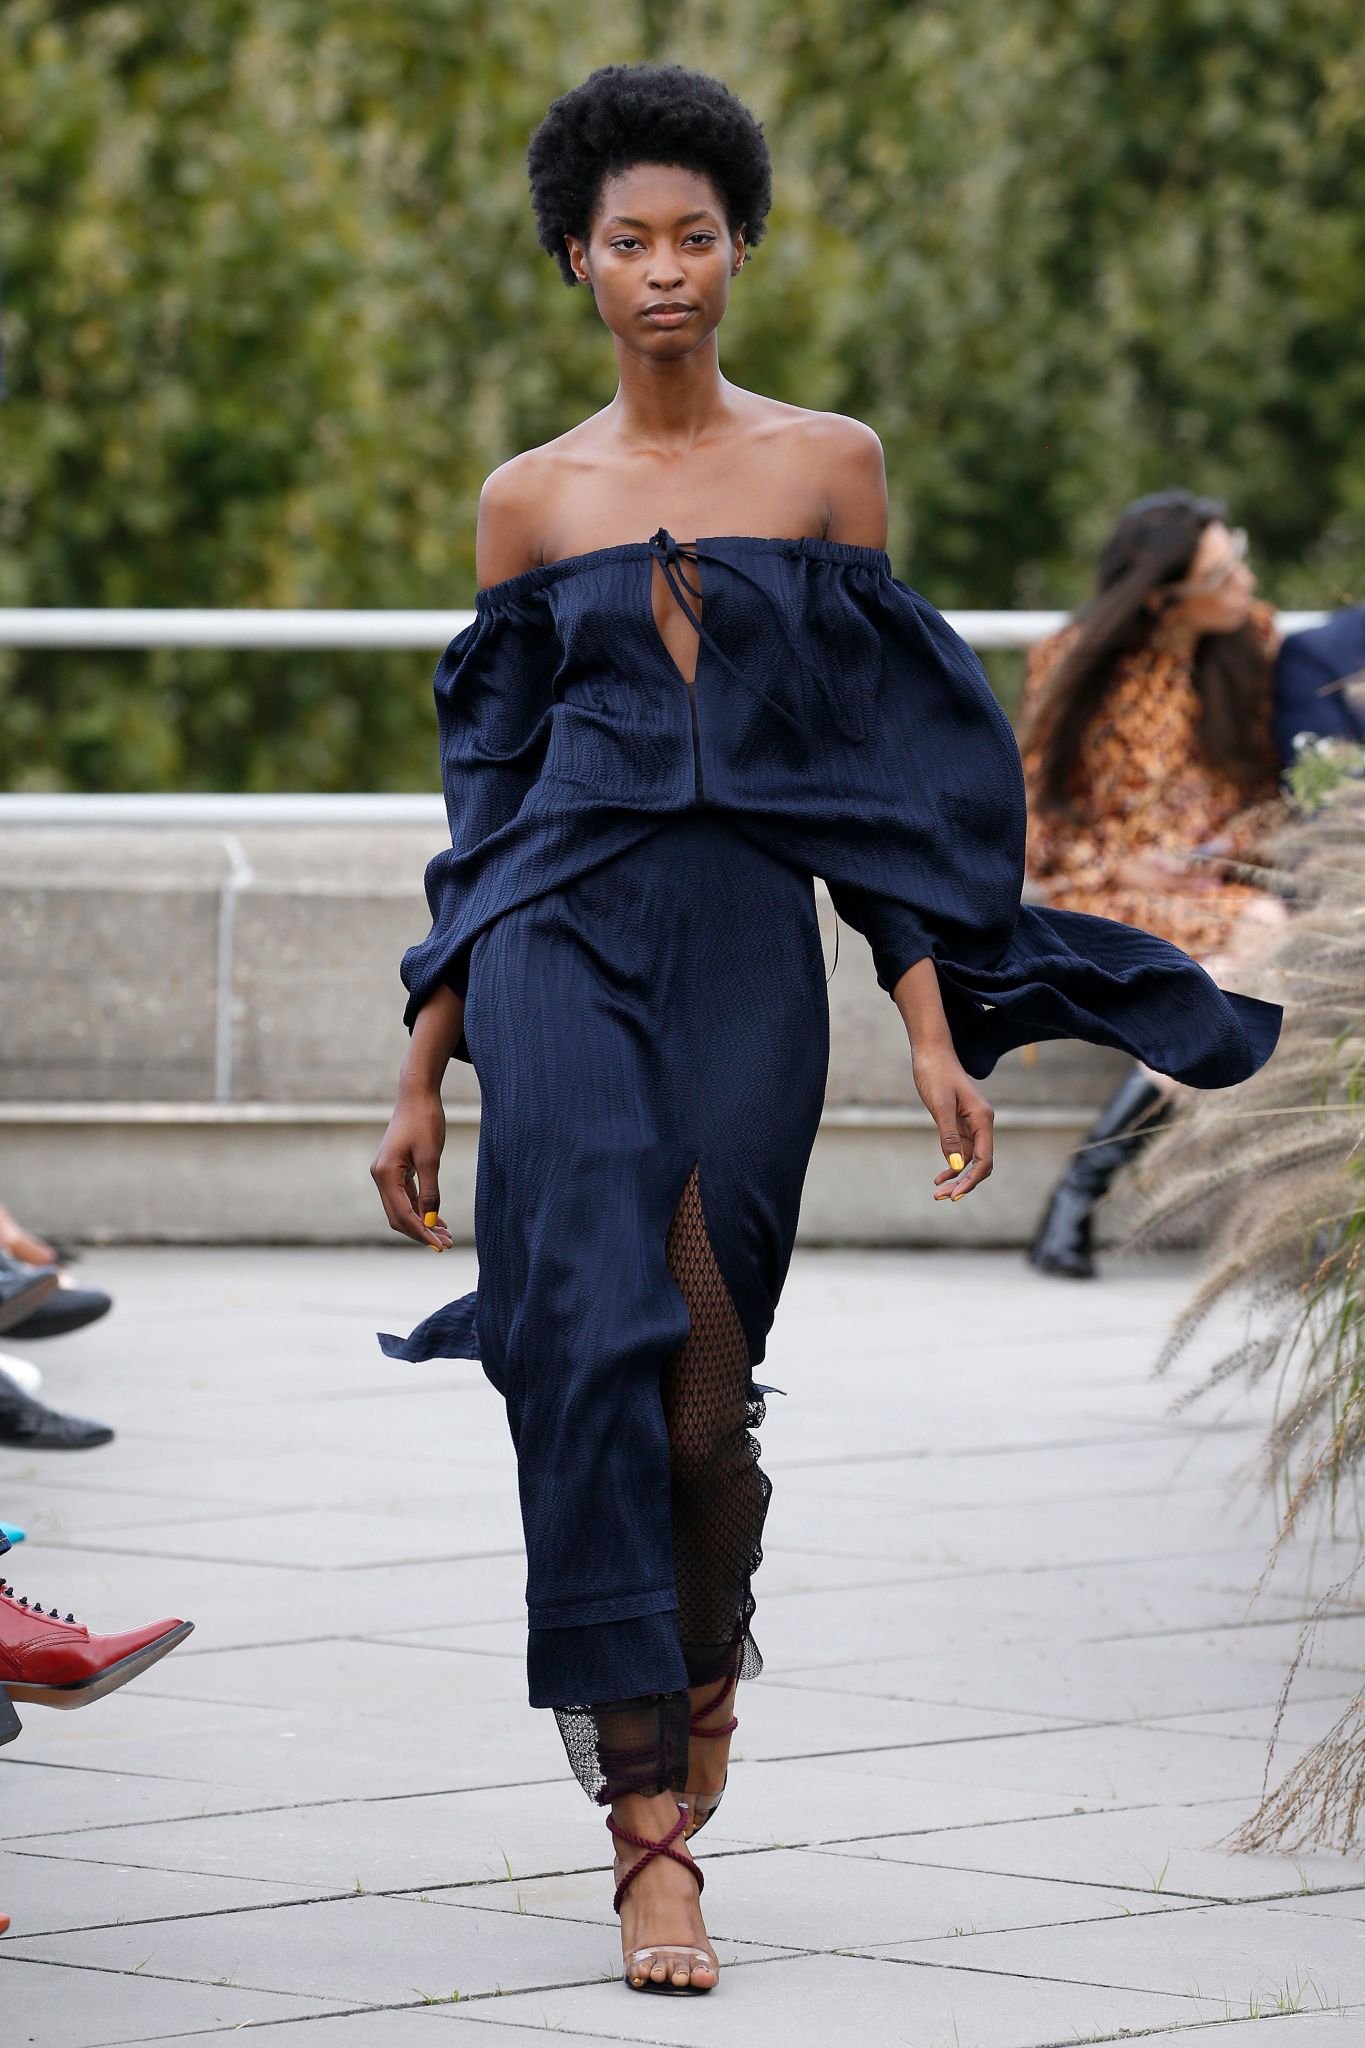 Black Models At London Fashion Week 2018